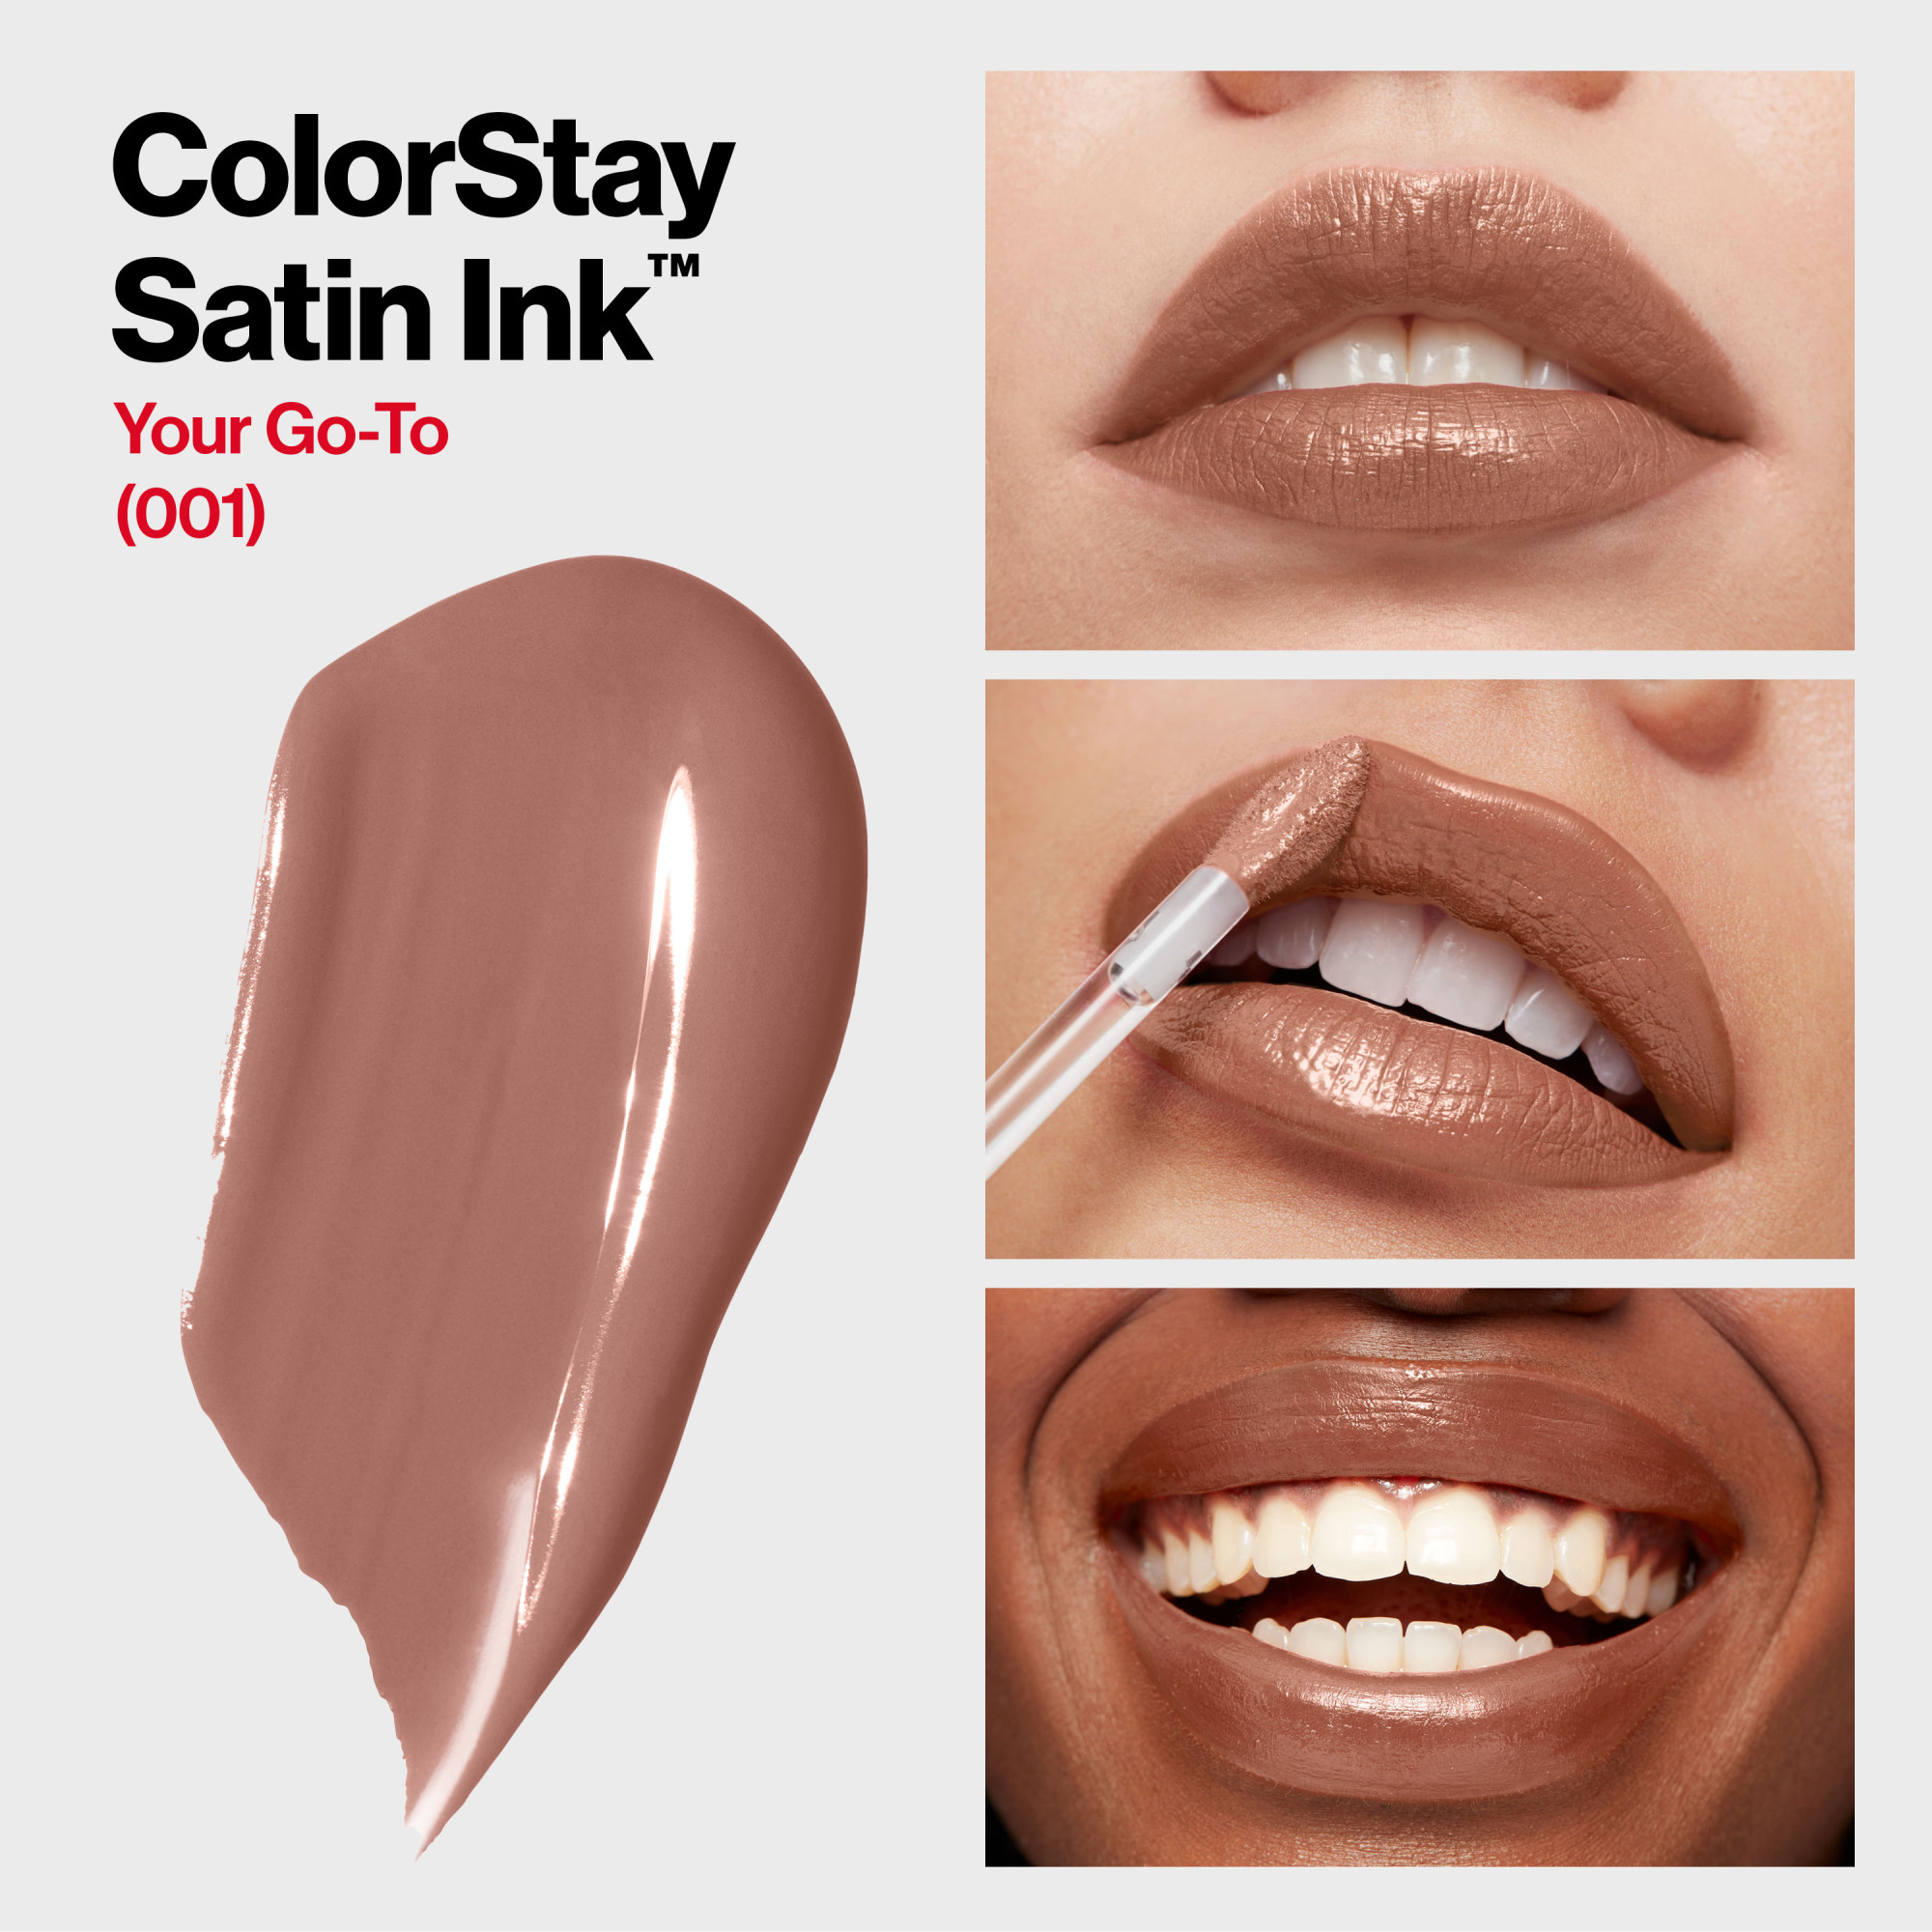 Revlon ColorStay Satin Ink Liquid Lipstick, Longwear Rich Lip Colors, 001 Your Go-To, 0.17 fl. Oz - image 3 of 11